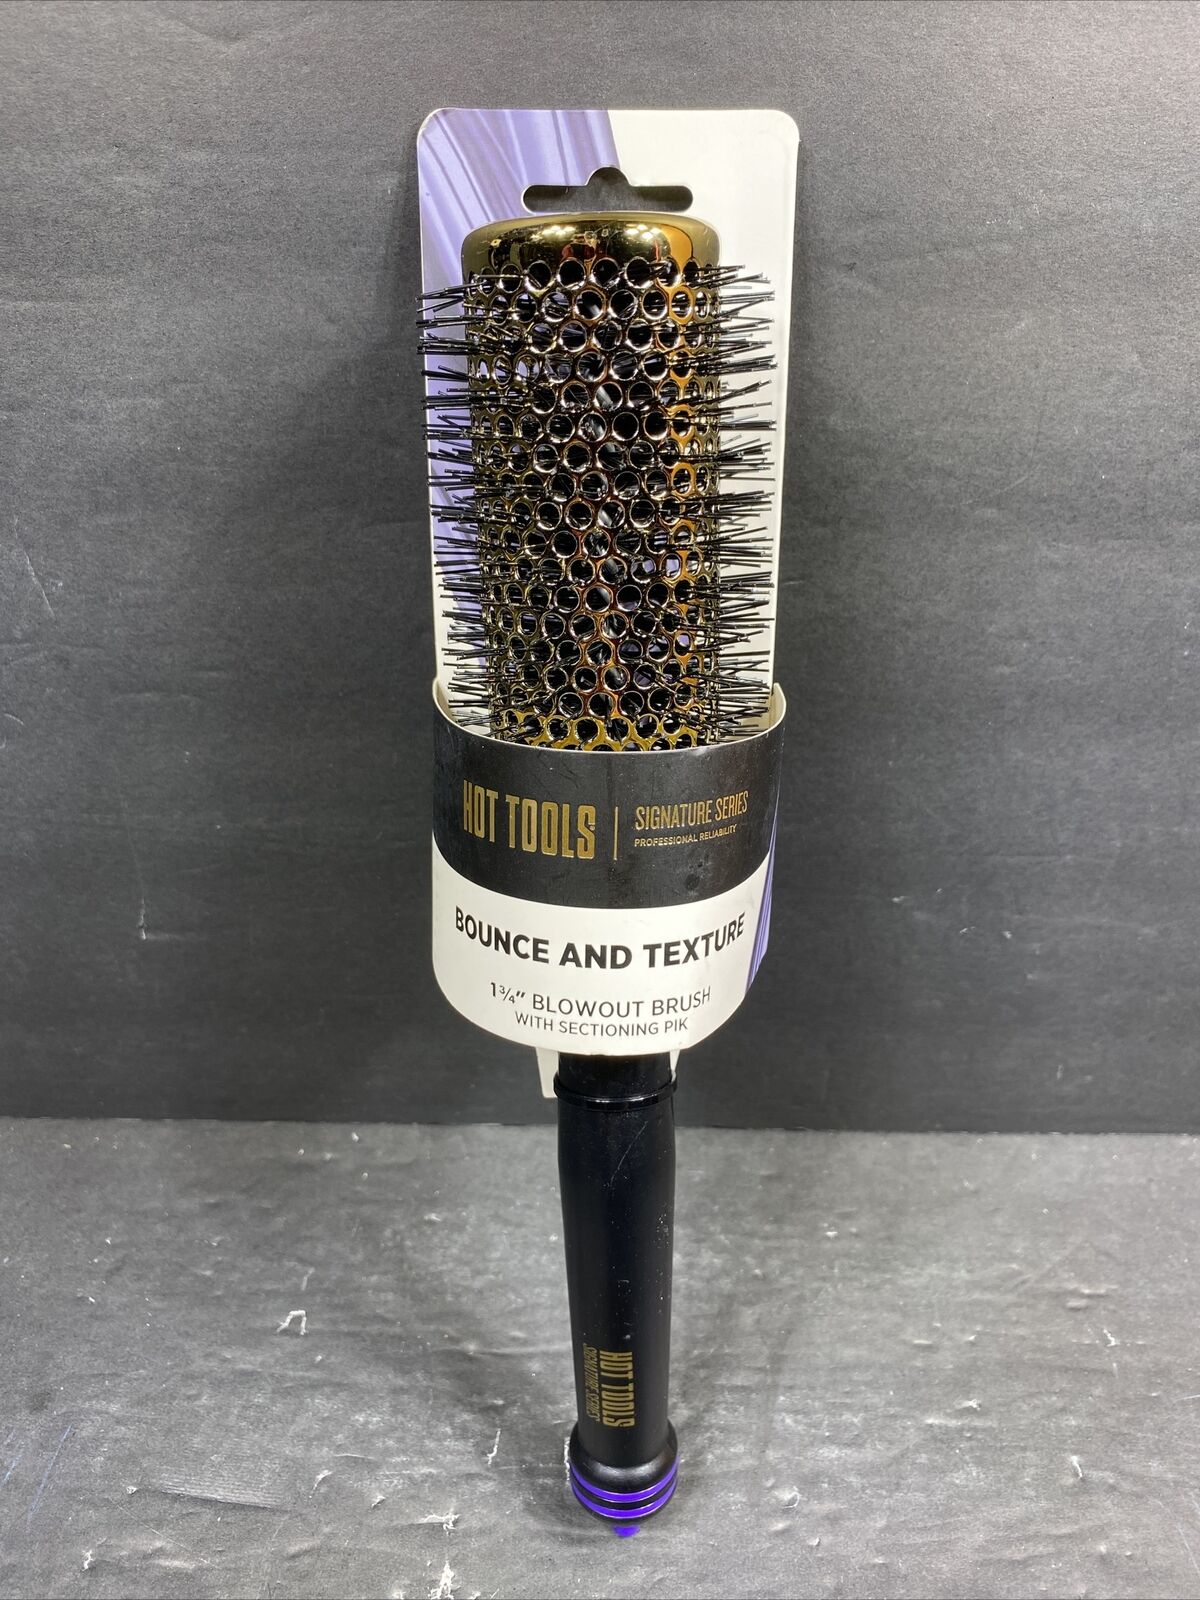 Hot Tools Black Gold Signature Series Bounce & Texture Hair Blowout Brush 1 3/4”